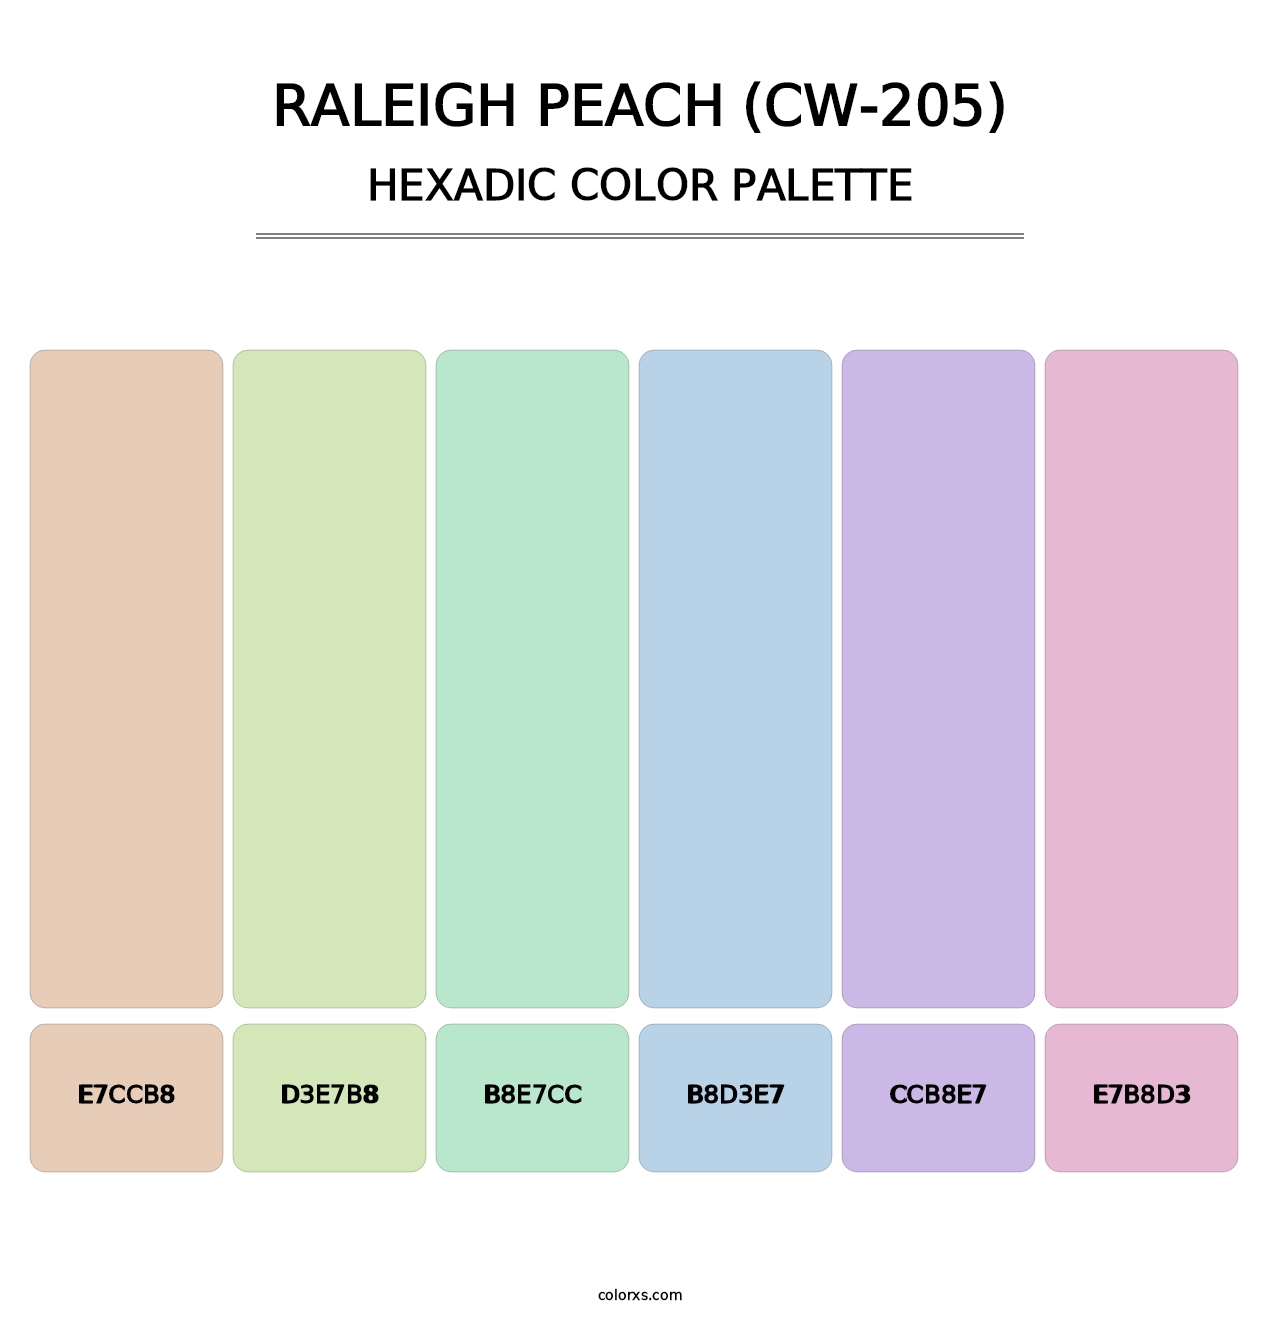 Raleigh Peach (CW-205) - Hexadic Color Palette